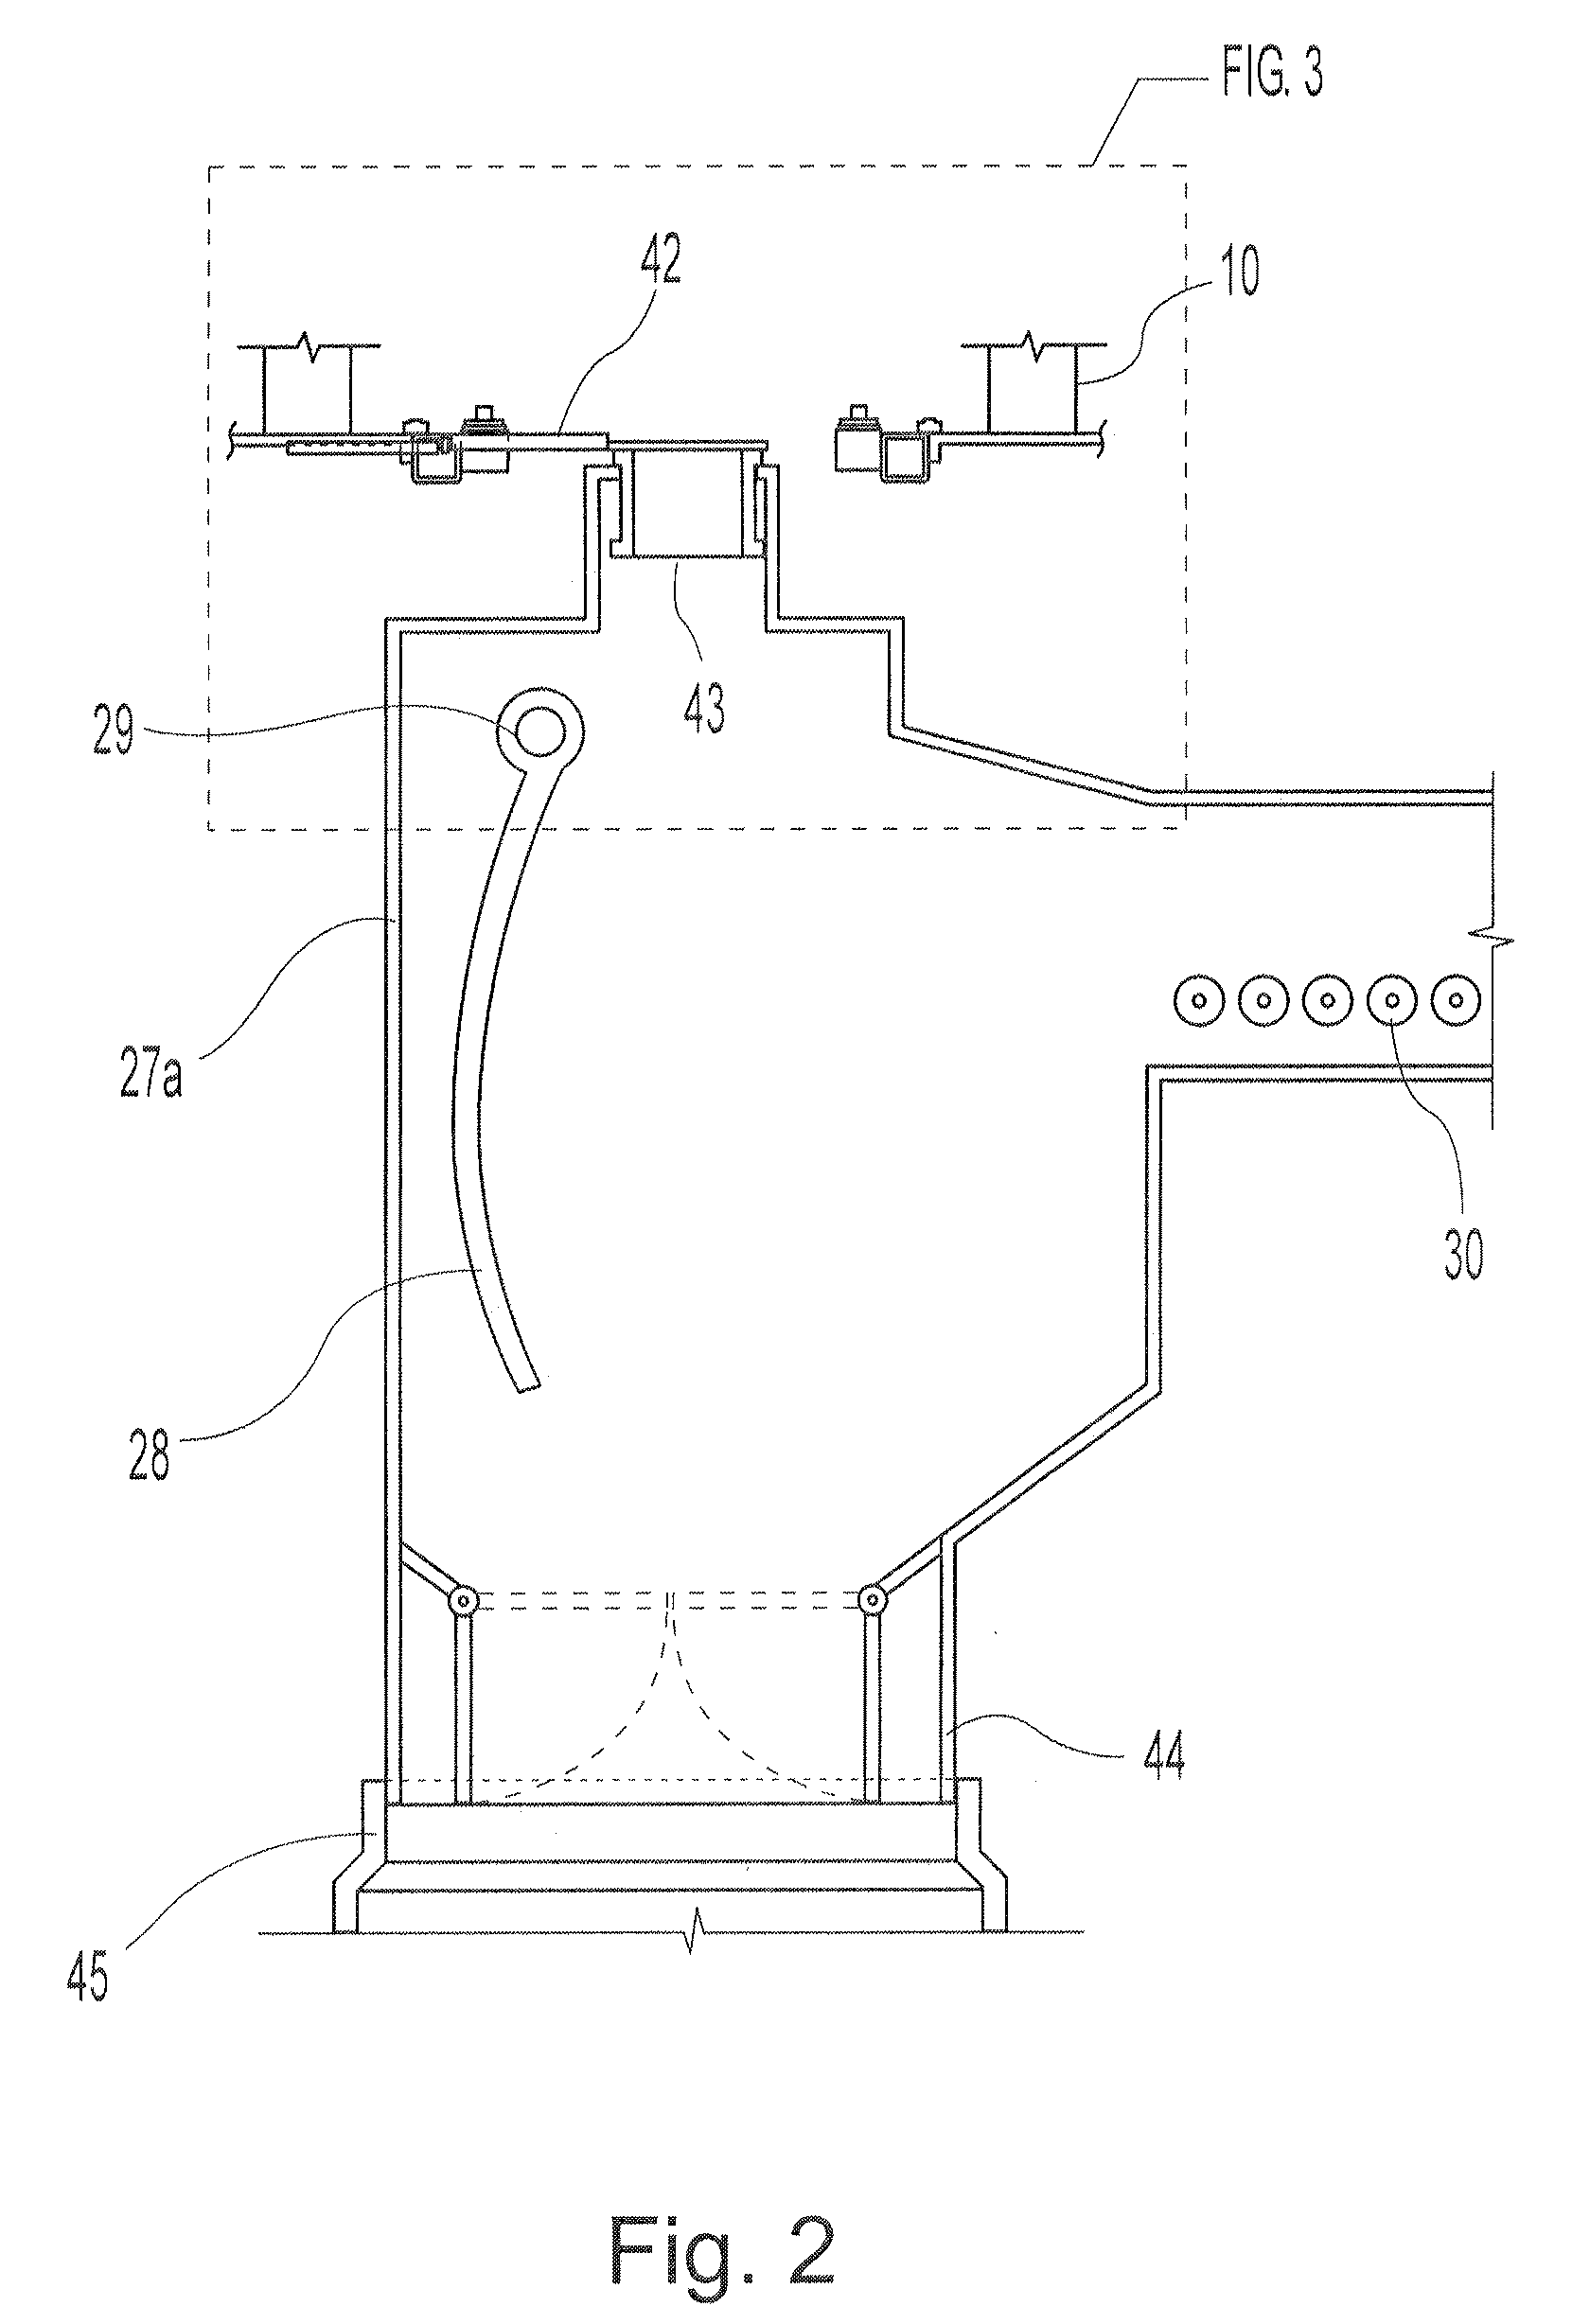 Apparatus for continuous strip casting